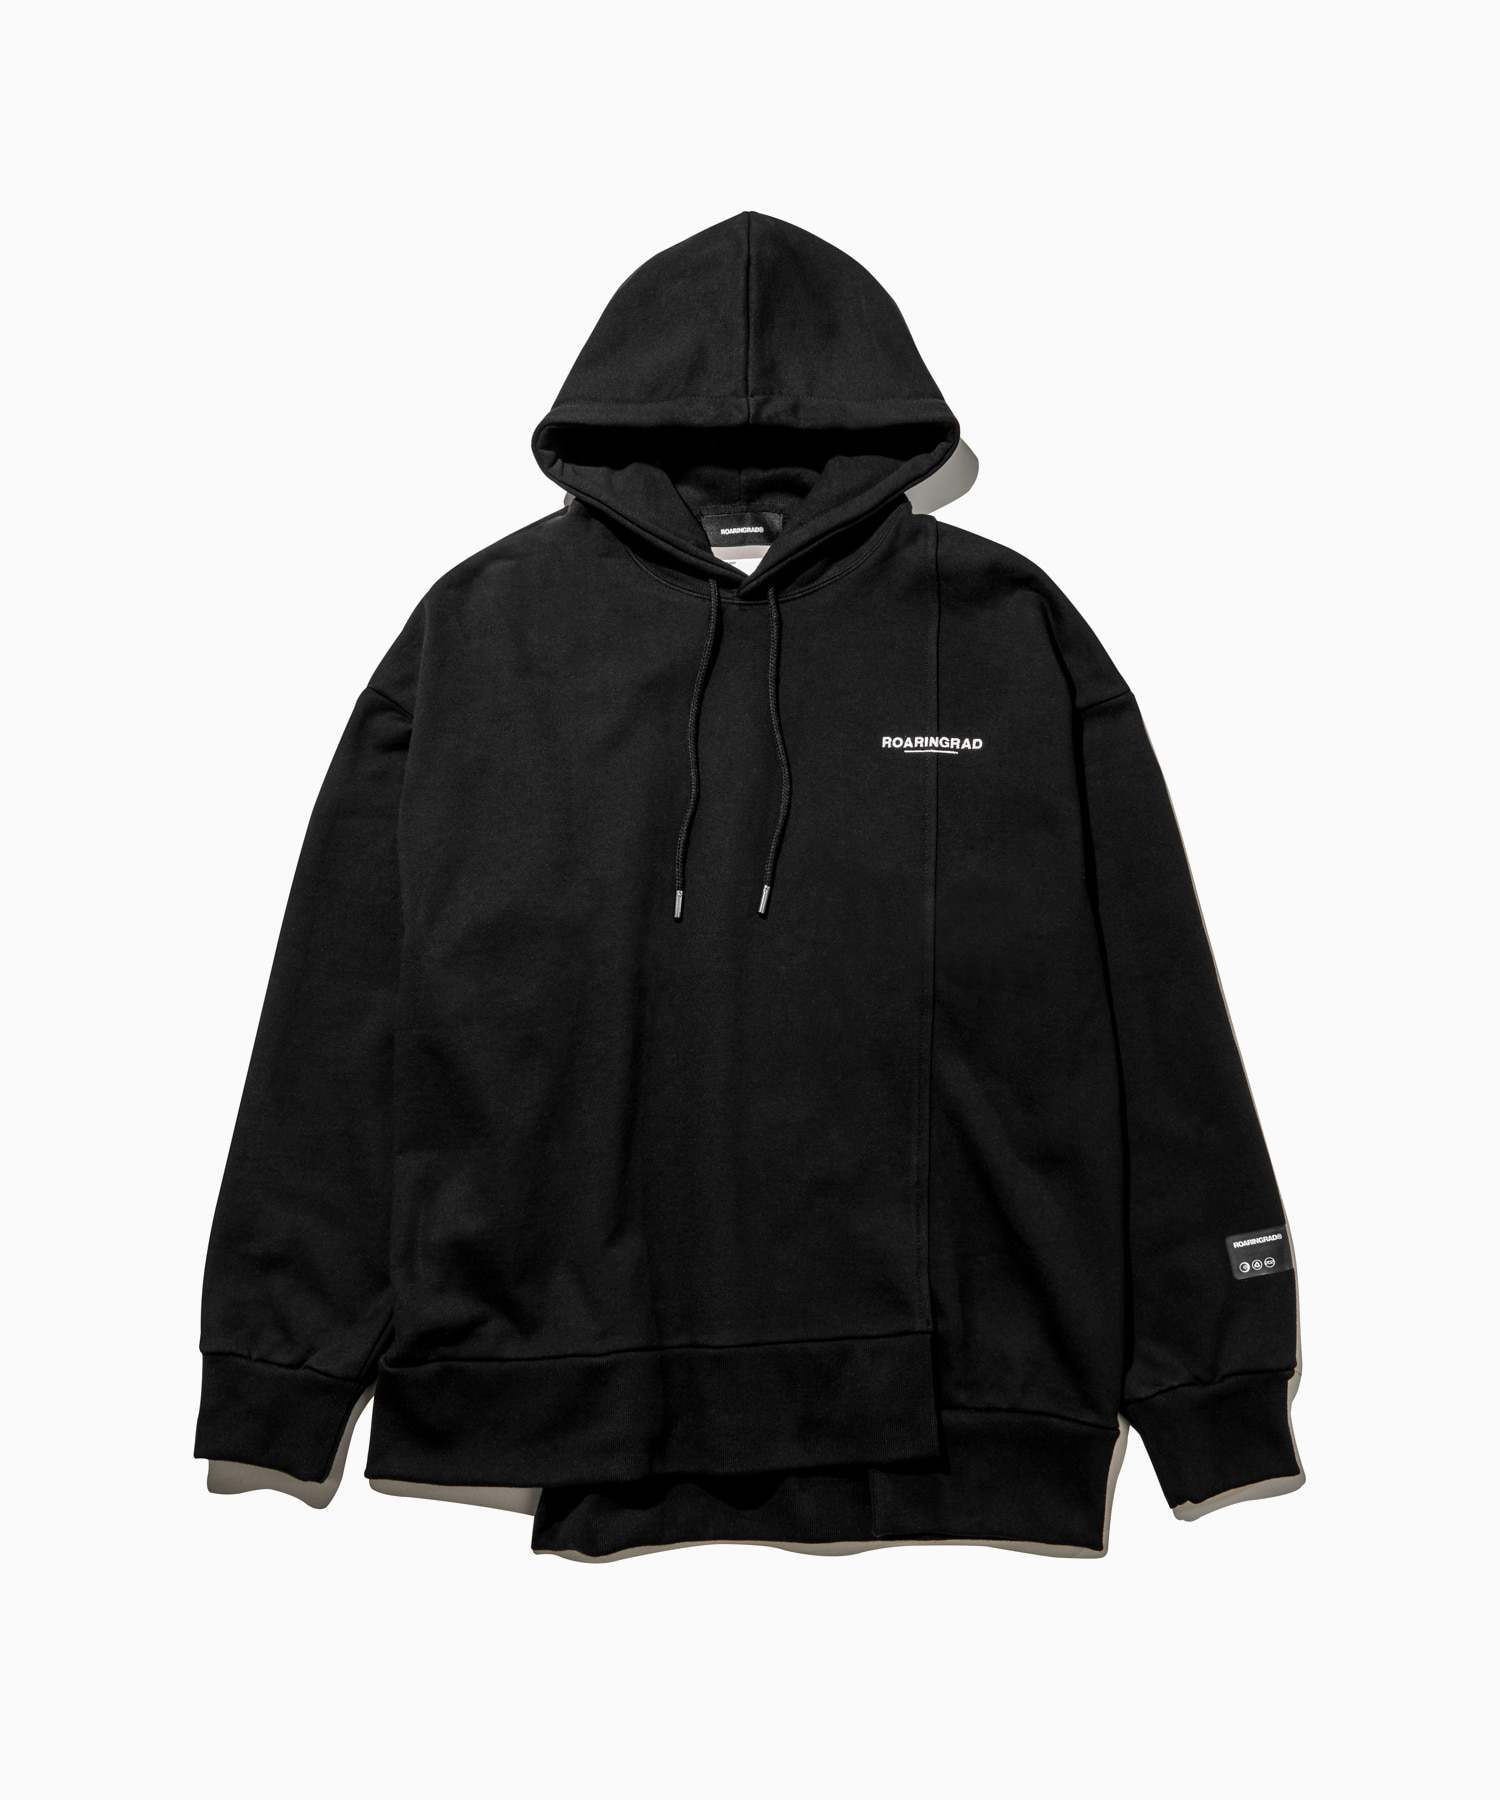 asymmetric sweat hoodie black - 로어링라드(ROARINGRAD)